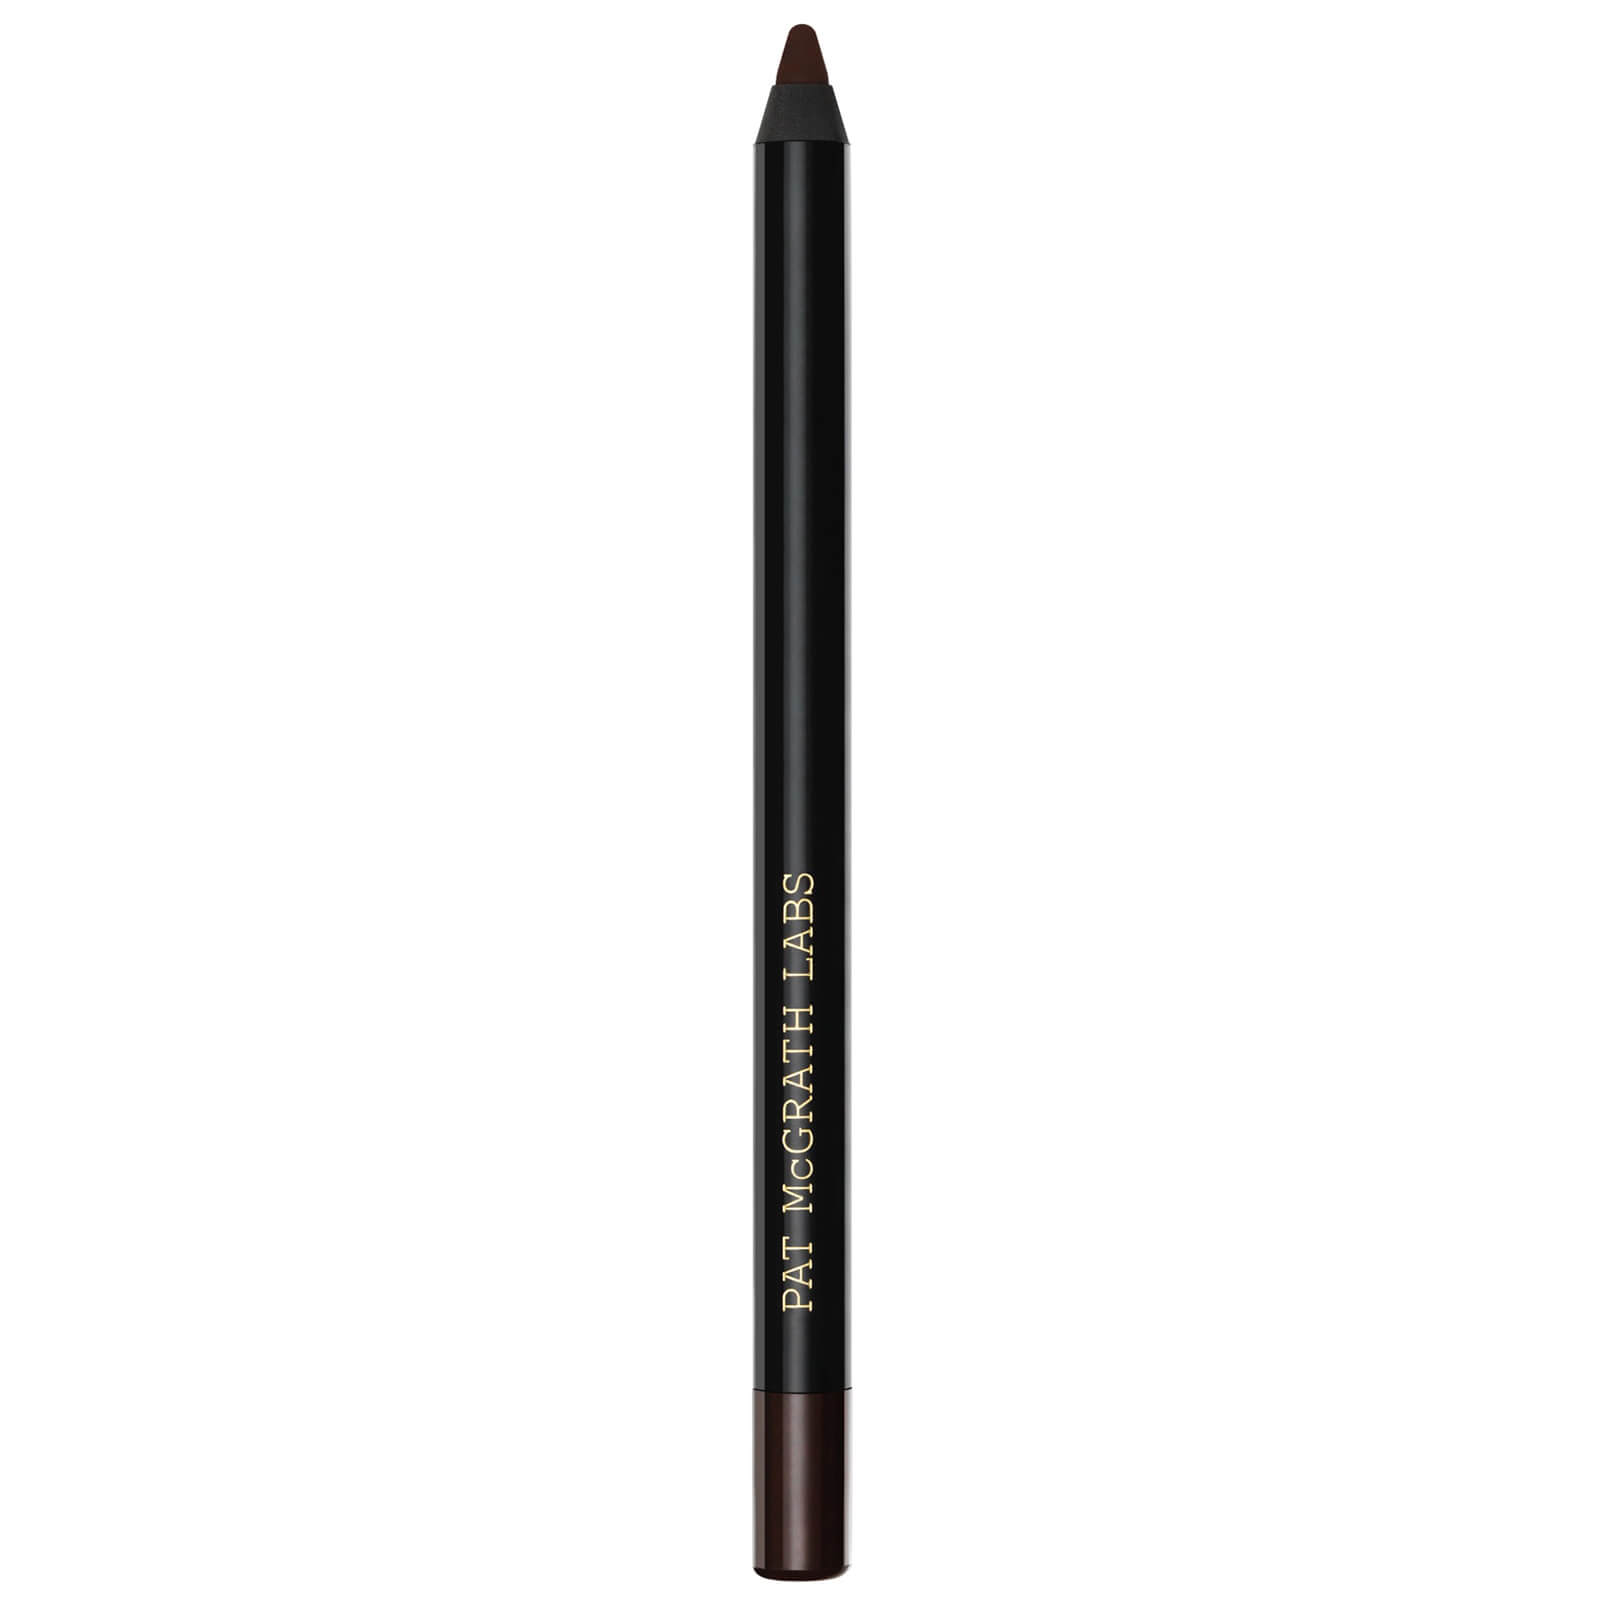 Pat Mcgrath Labs Permagel Ultra Eye Pencil 1.2g (various Shades) - Xtreme Blk Coffee